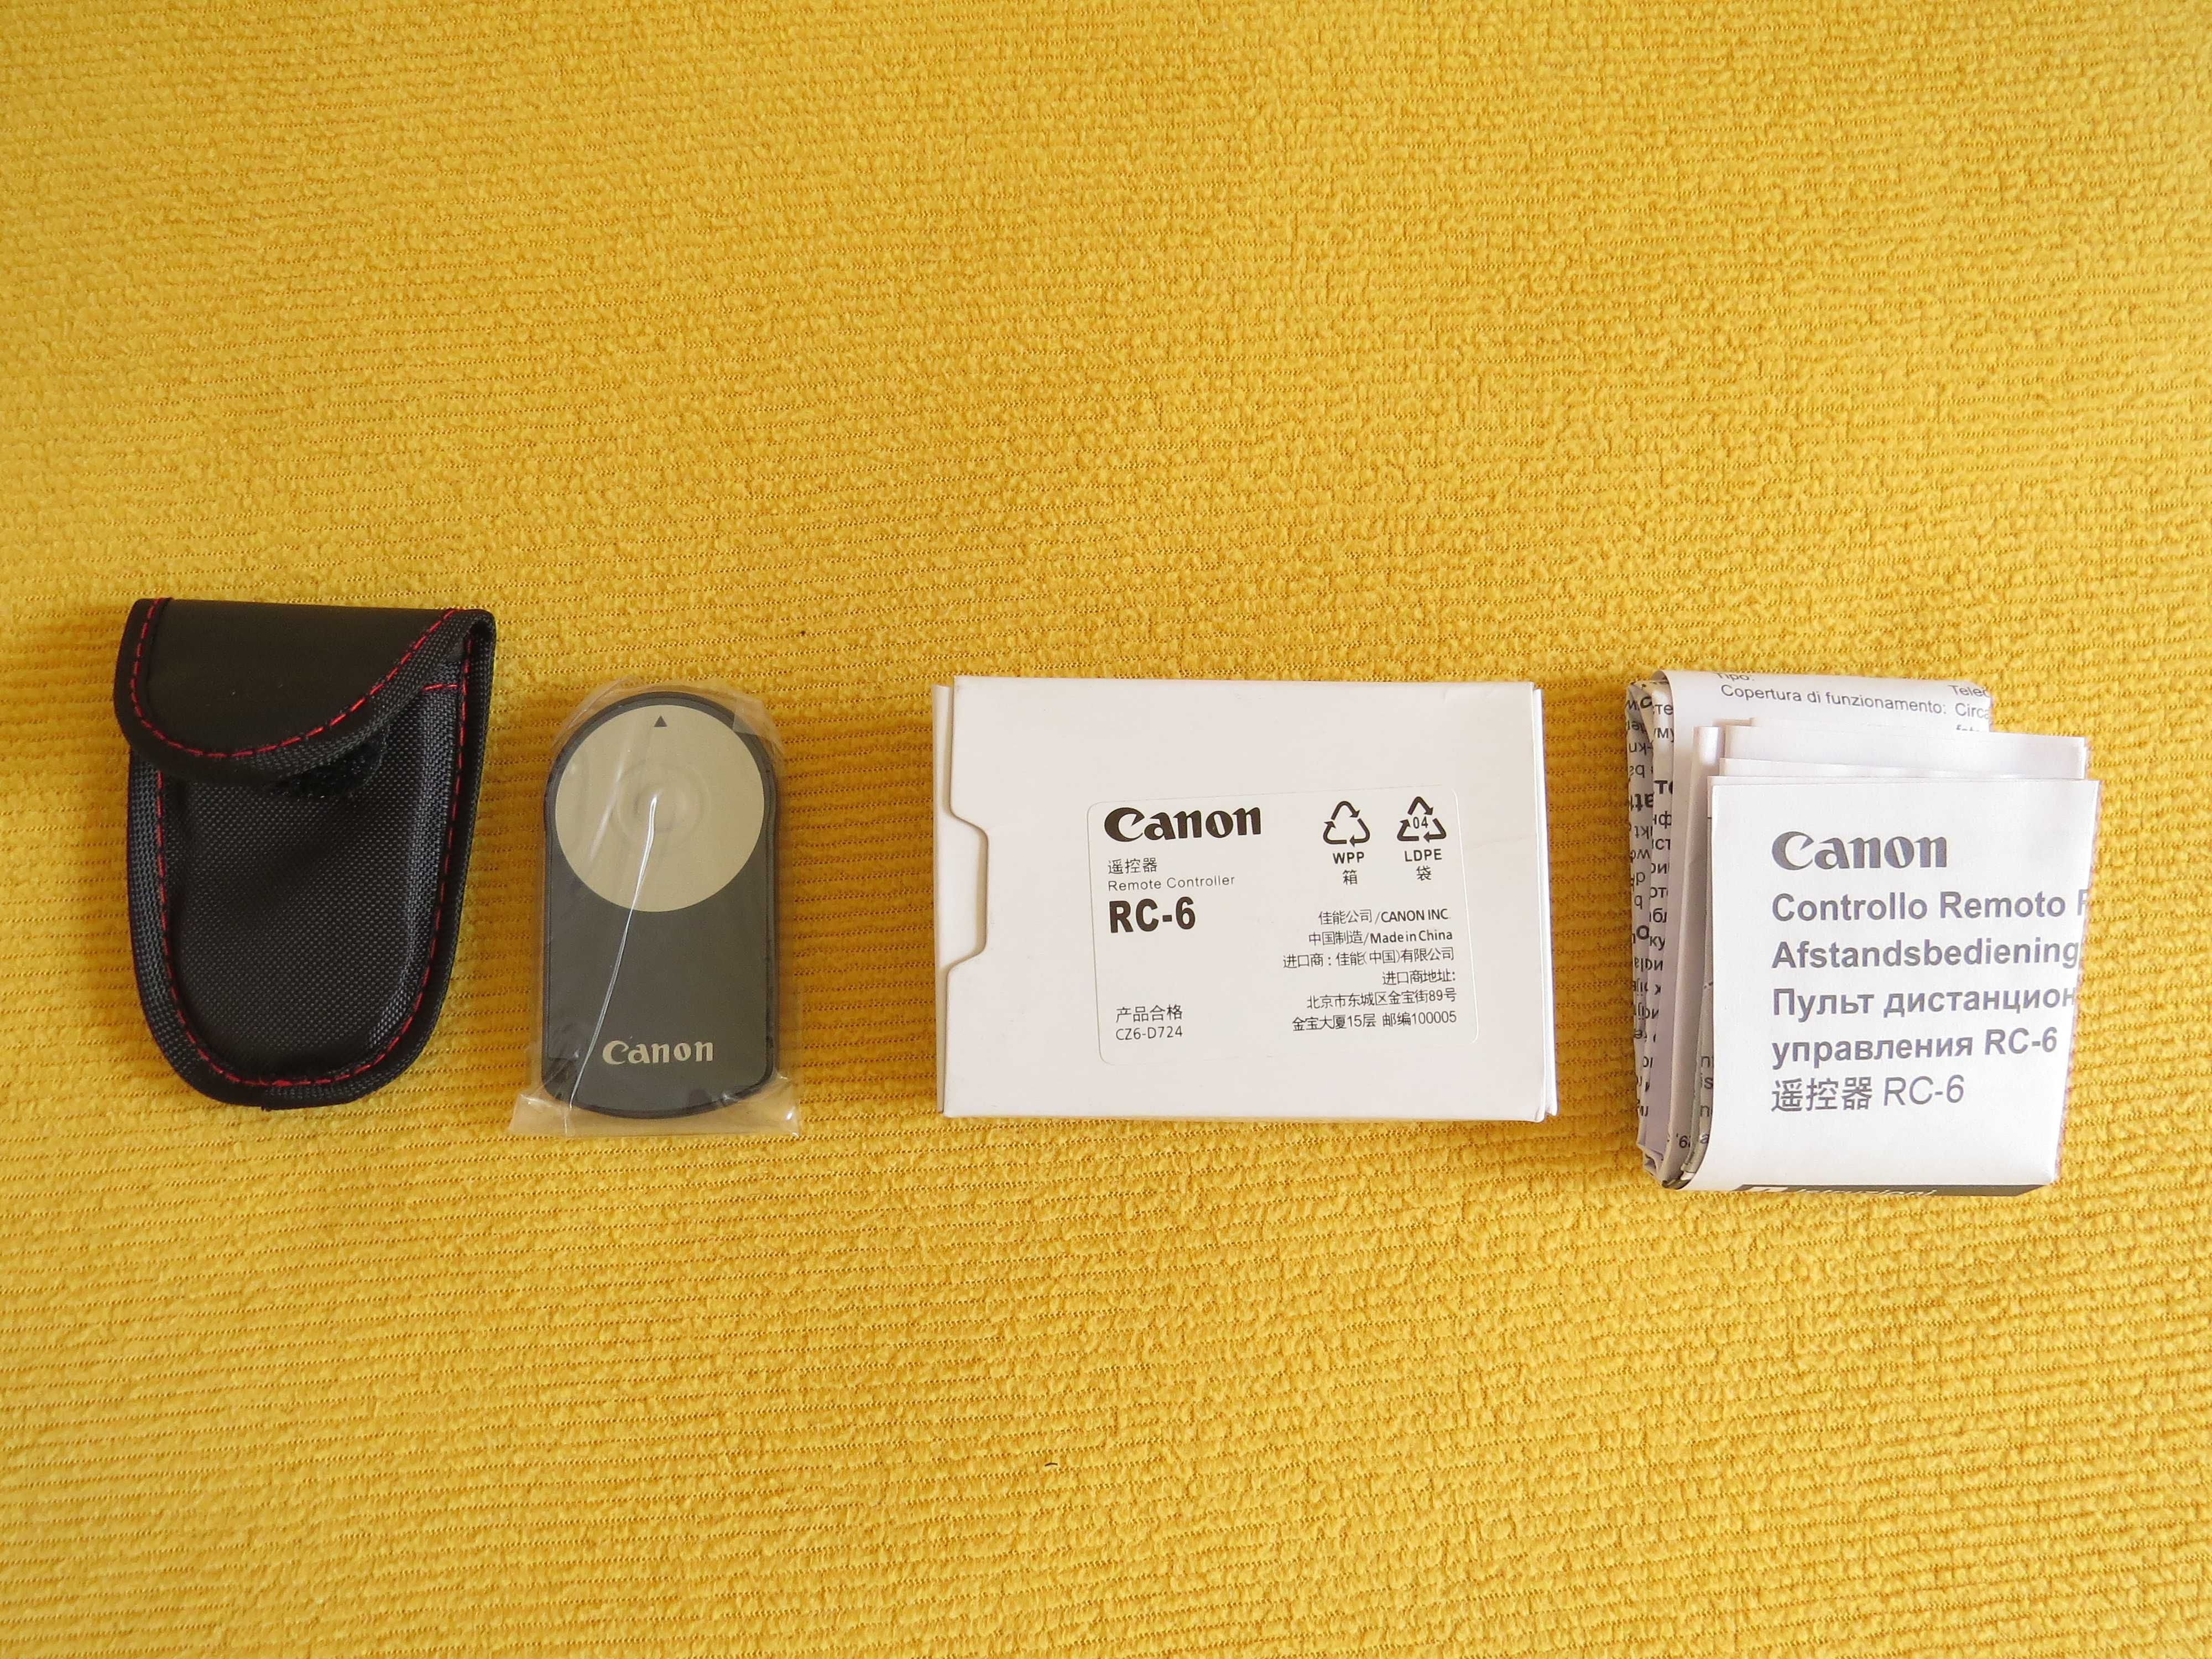 Telecomanda originala Canon - pentru aparatele foto DRLS